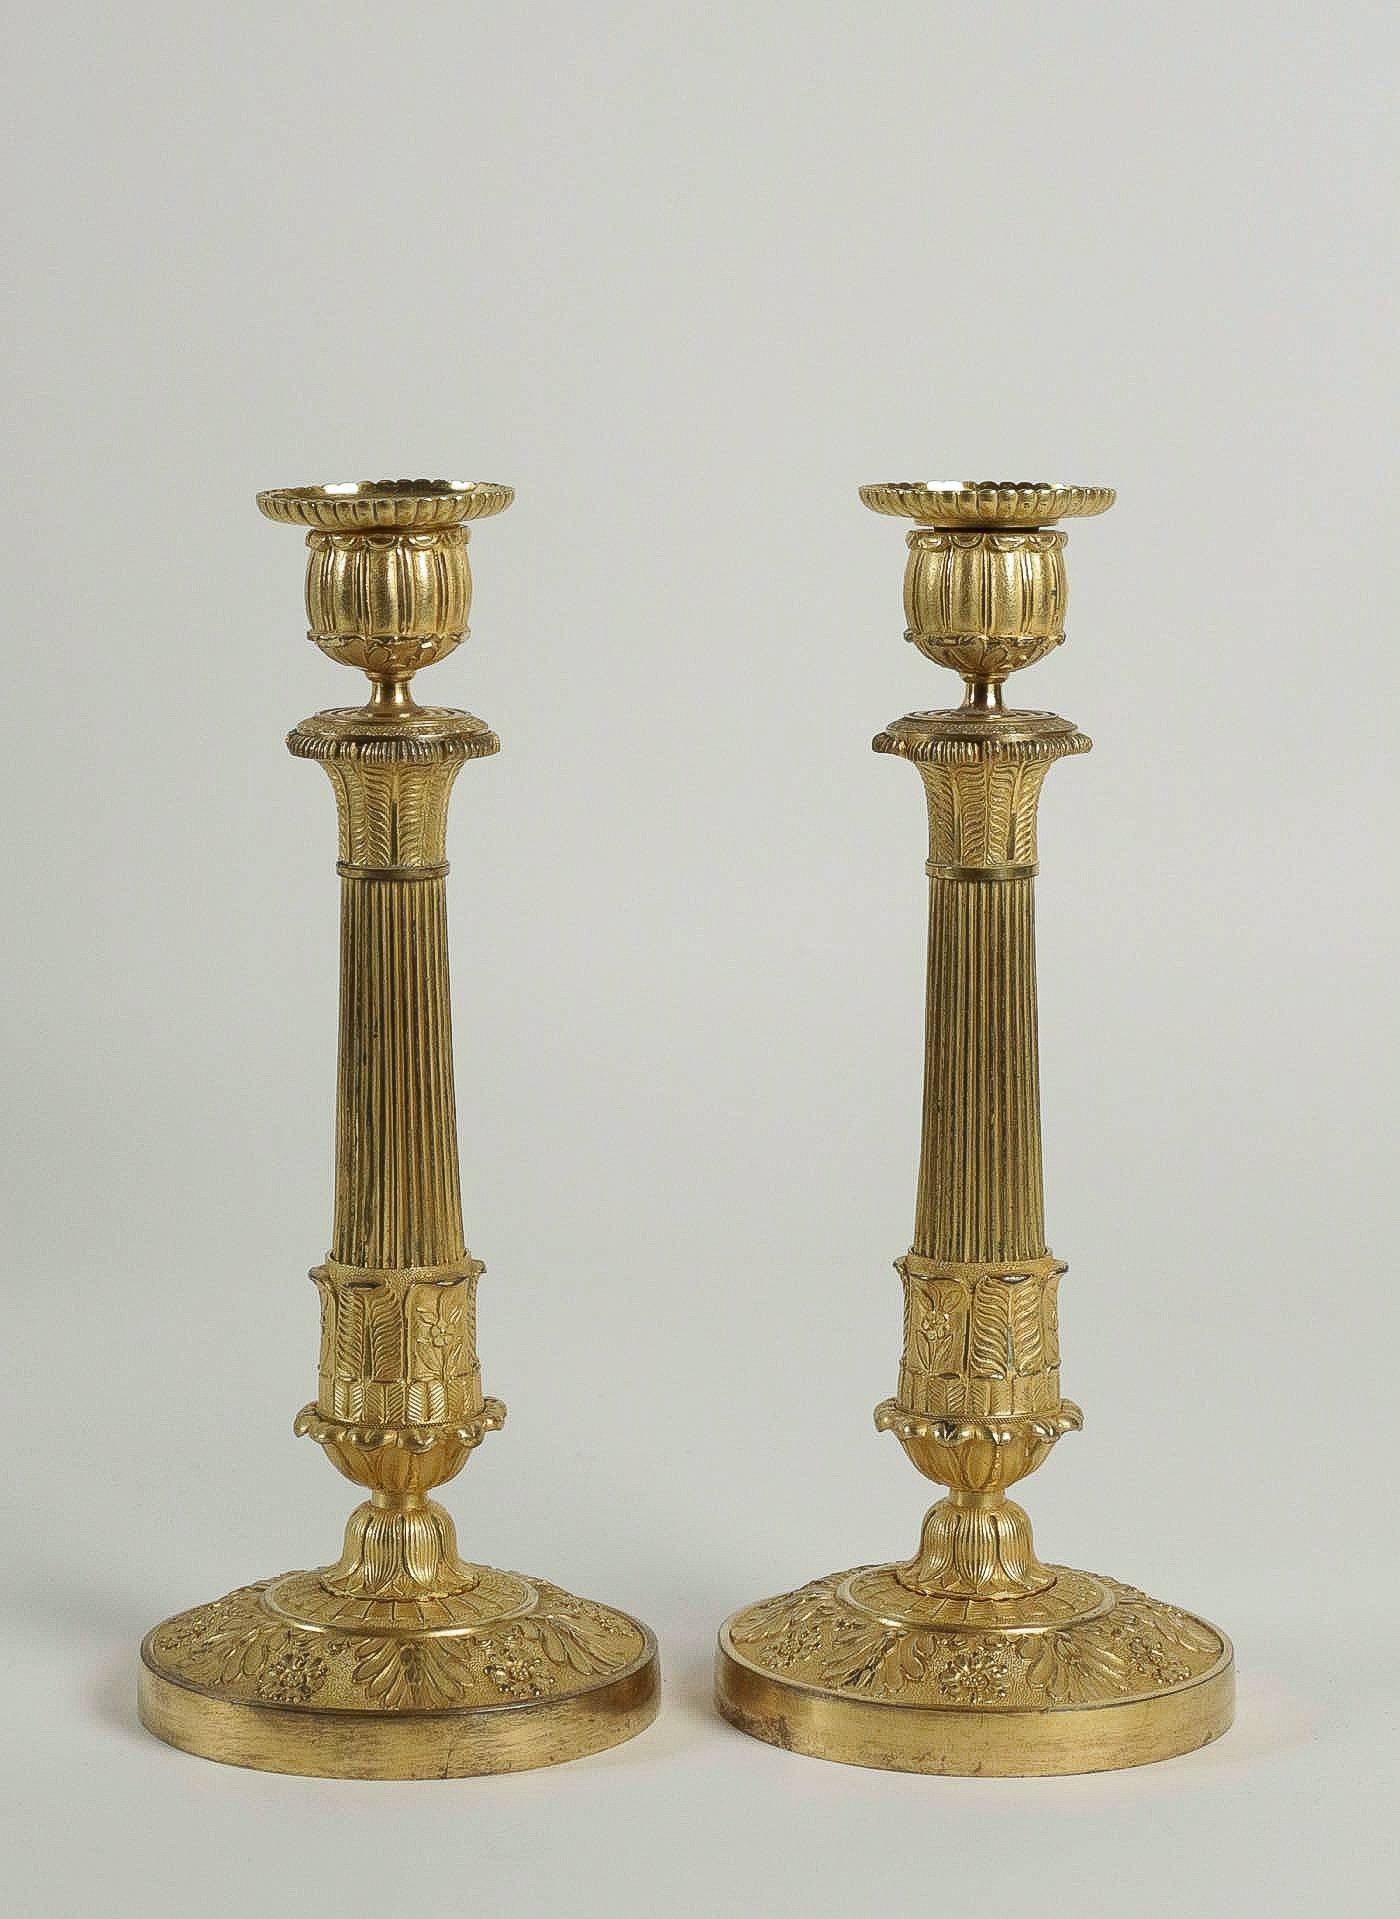 Gilt French Empire Period, Pair of Chiseled Ormolu Candlesticks, circa 1810